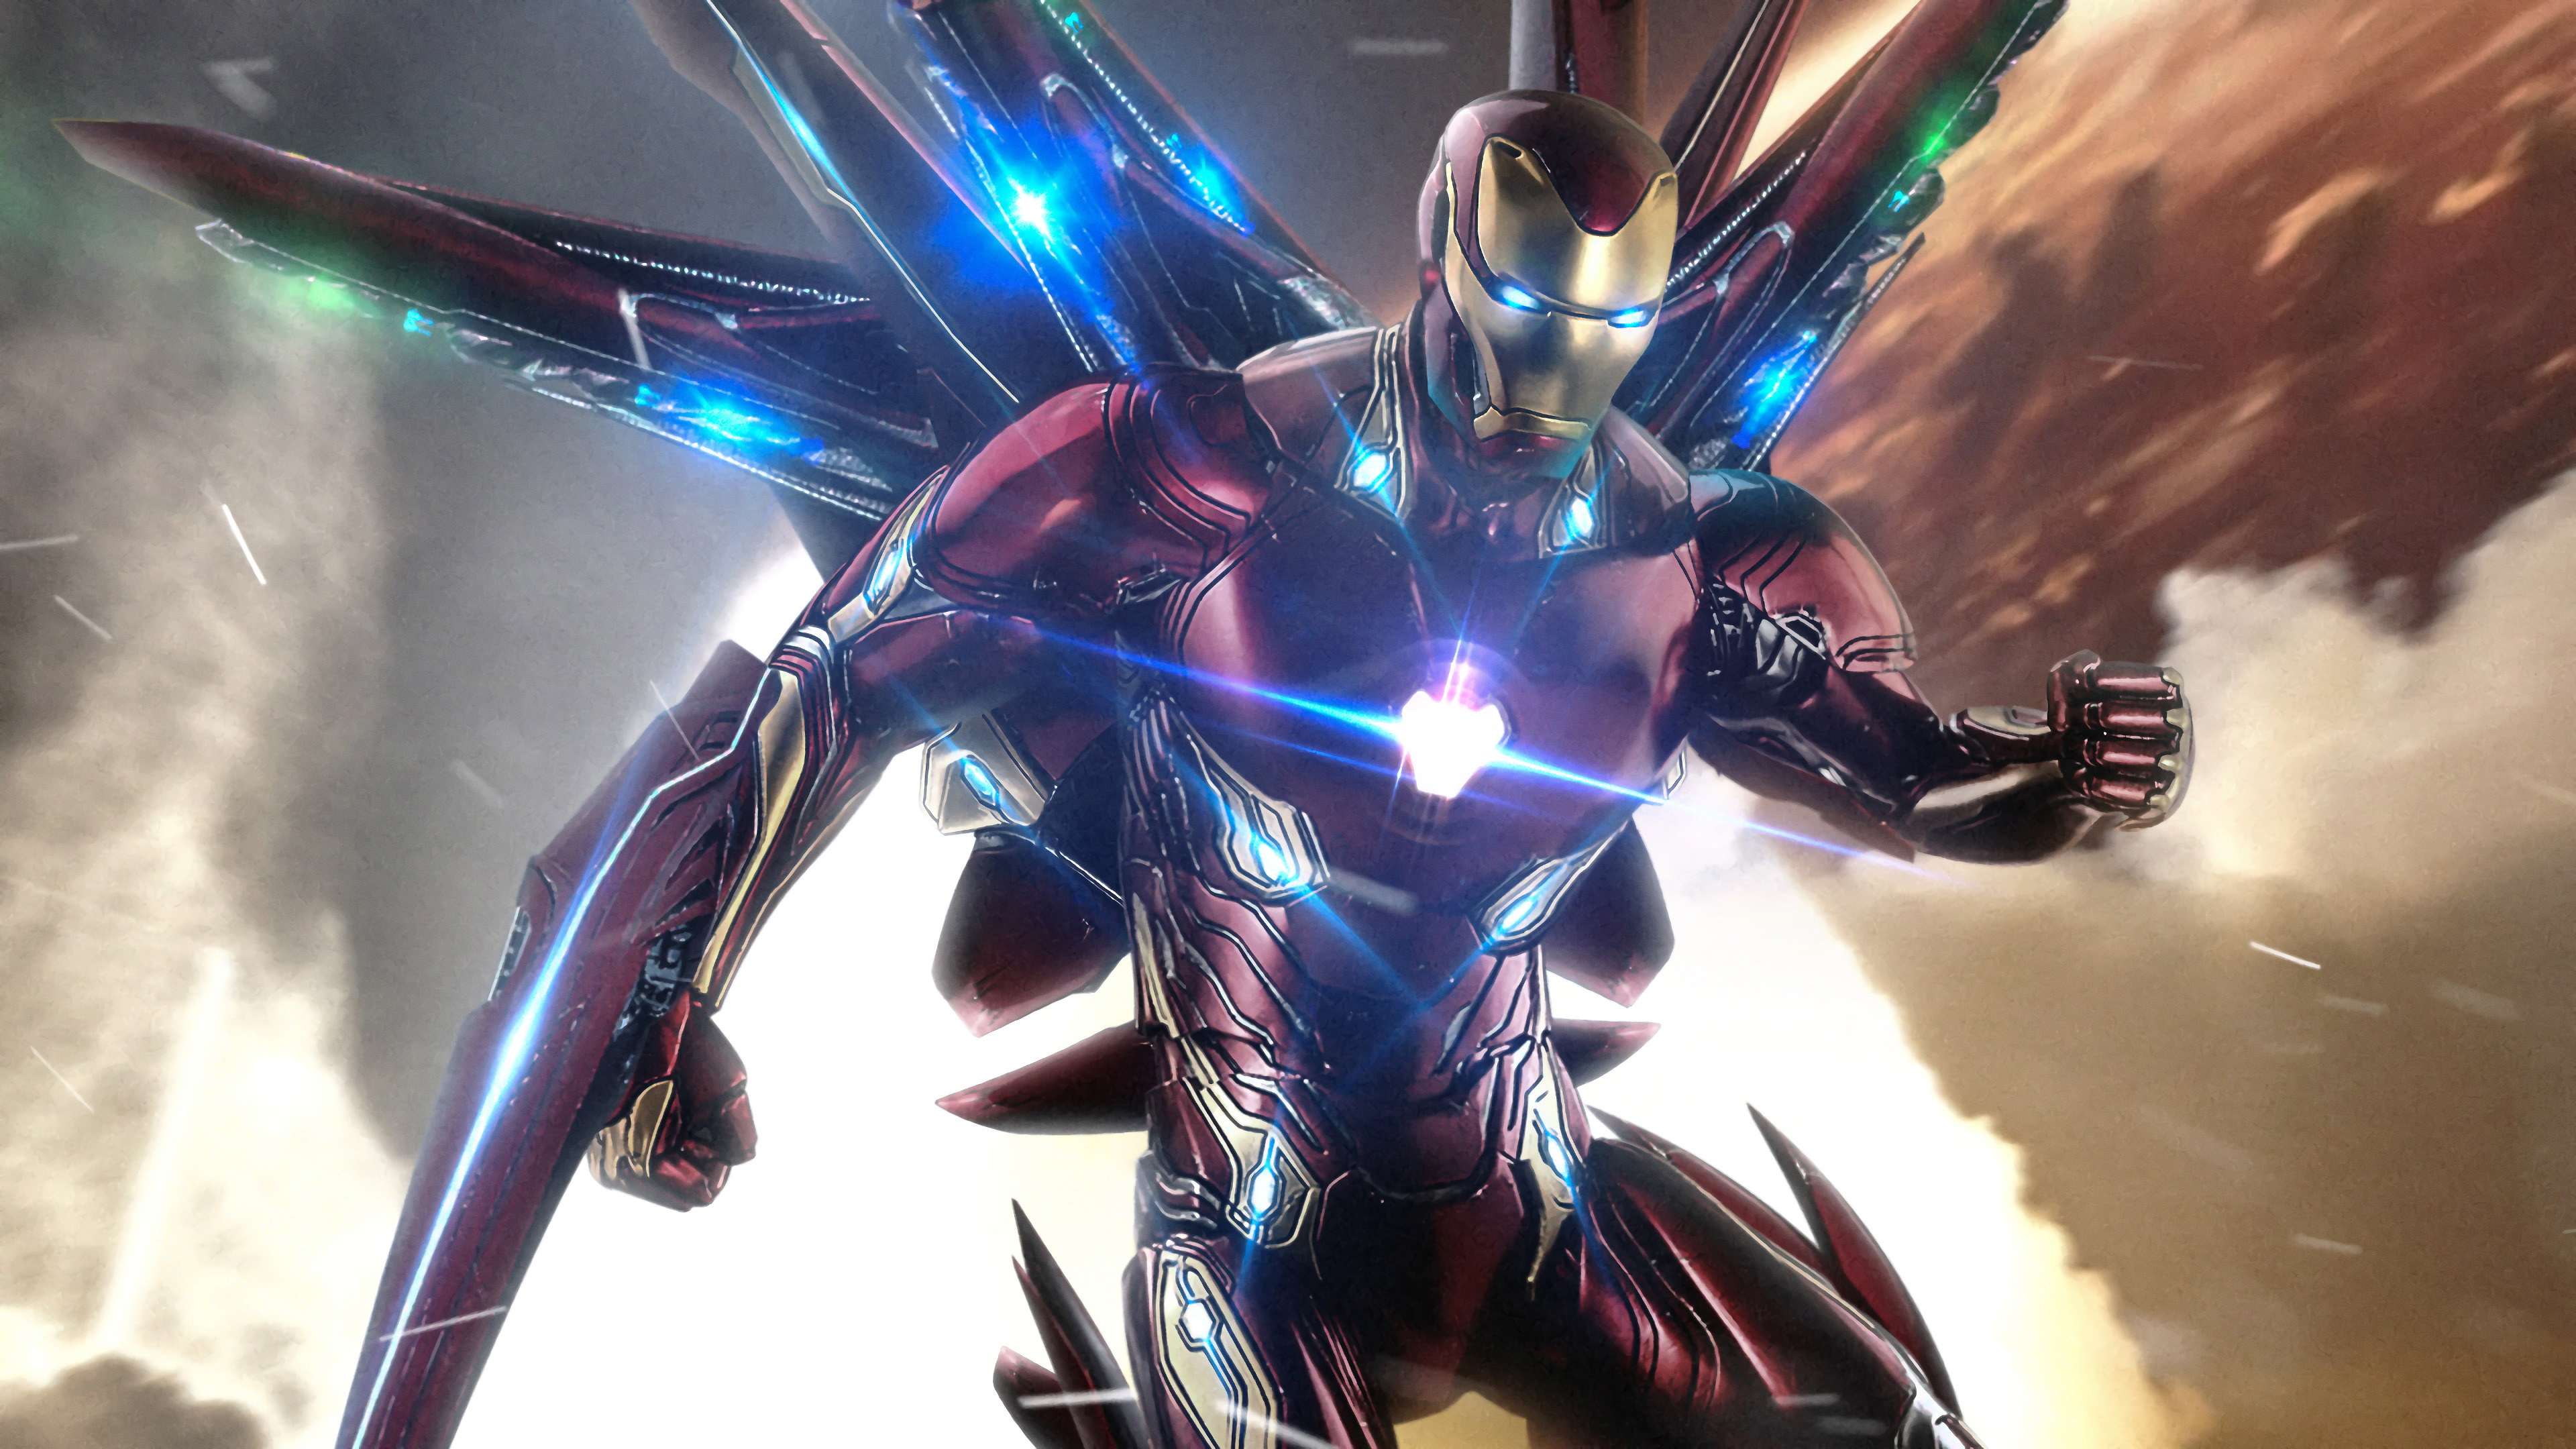 Iron Man Avengers: Endgame 4K